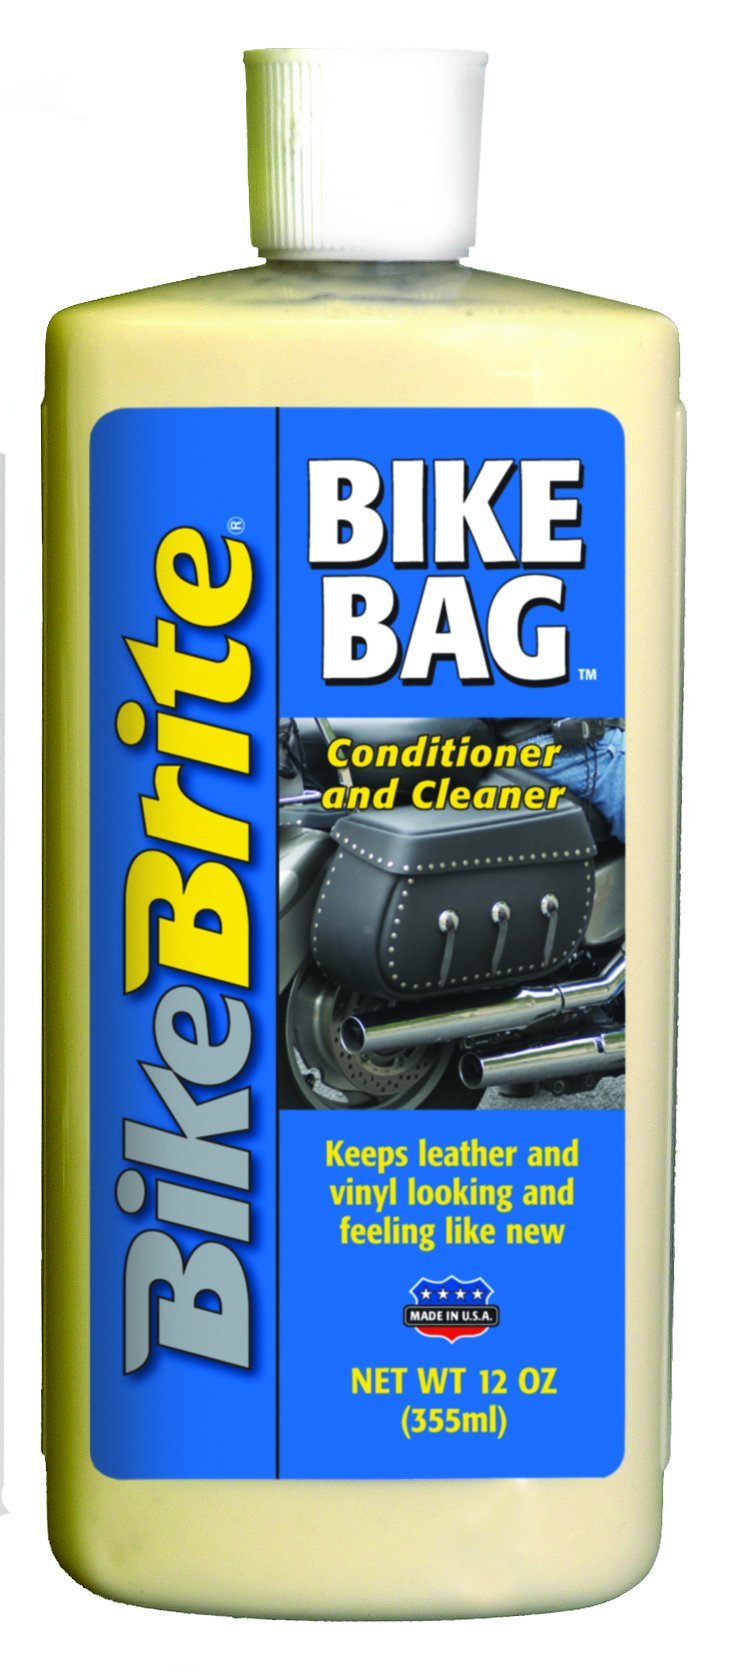  [AUSTRALIA] - Bike Brite MC00048 Bike Bag Leather and Vinyl Cleaner and Conditioner - 12 fl. oz.